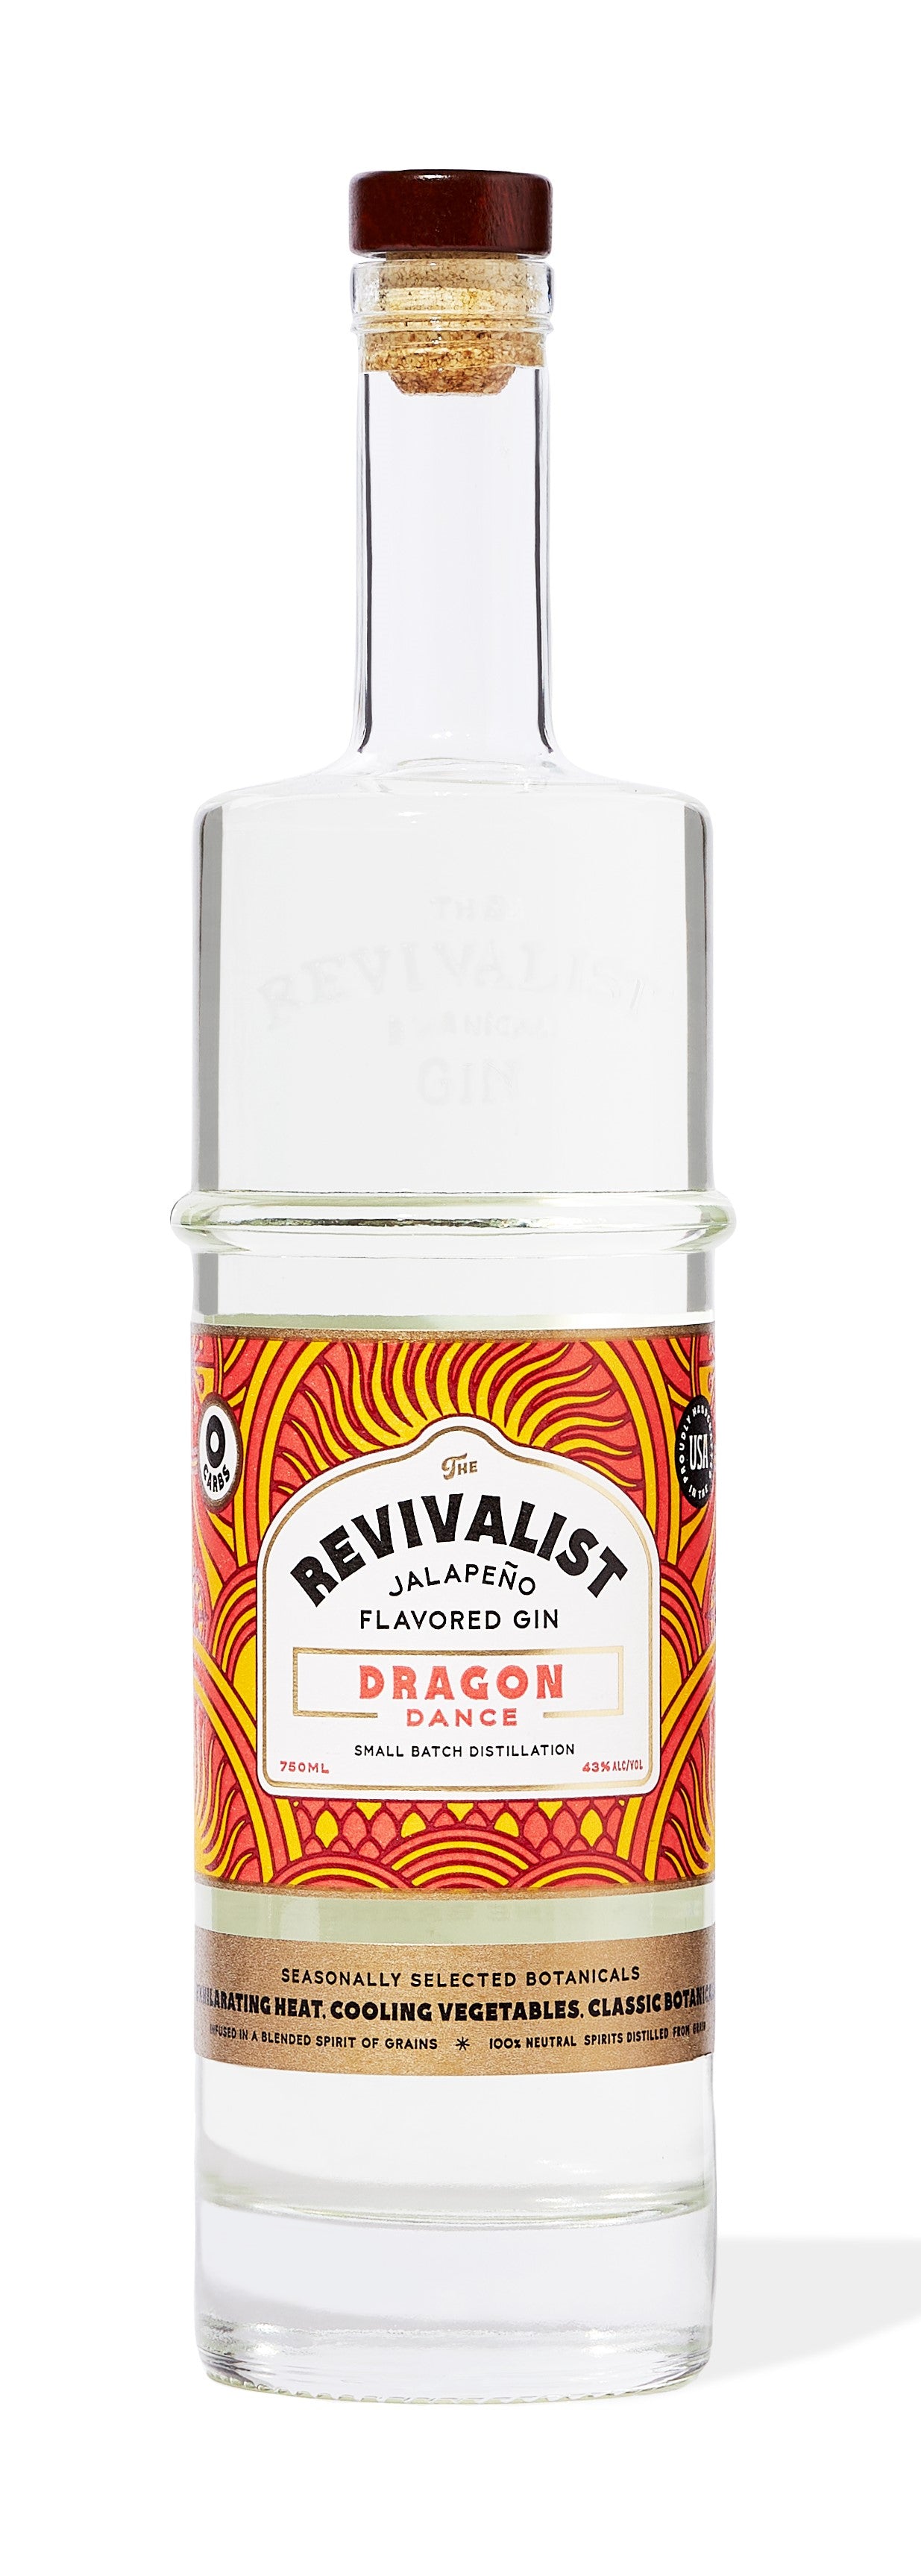 Revivalist Botanical Gin - Dragon Dance Jalapeno Gin 43% abv